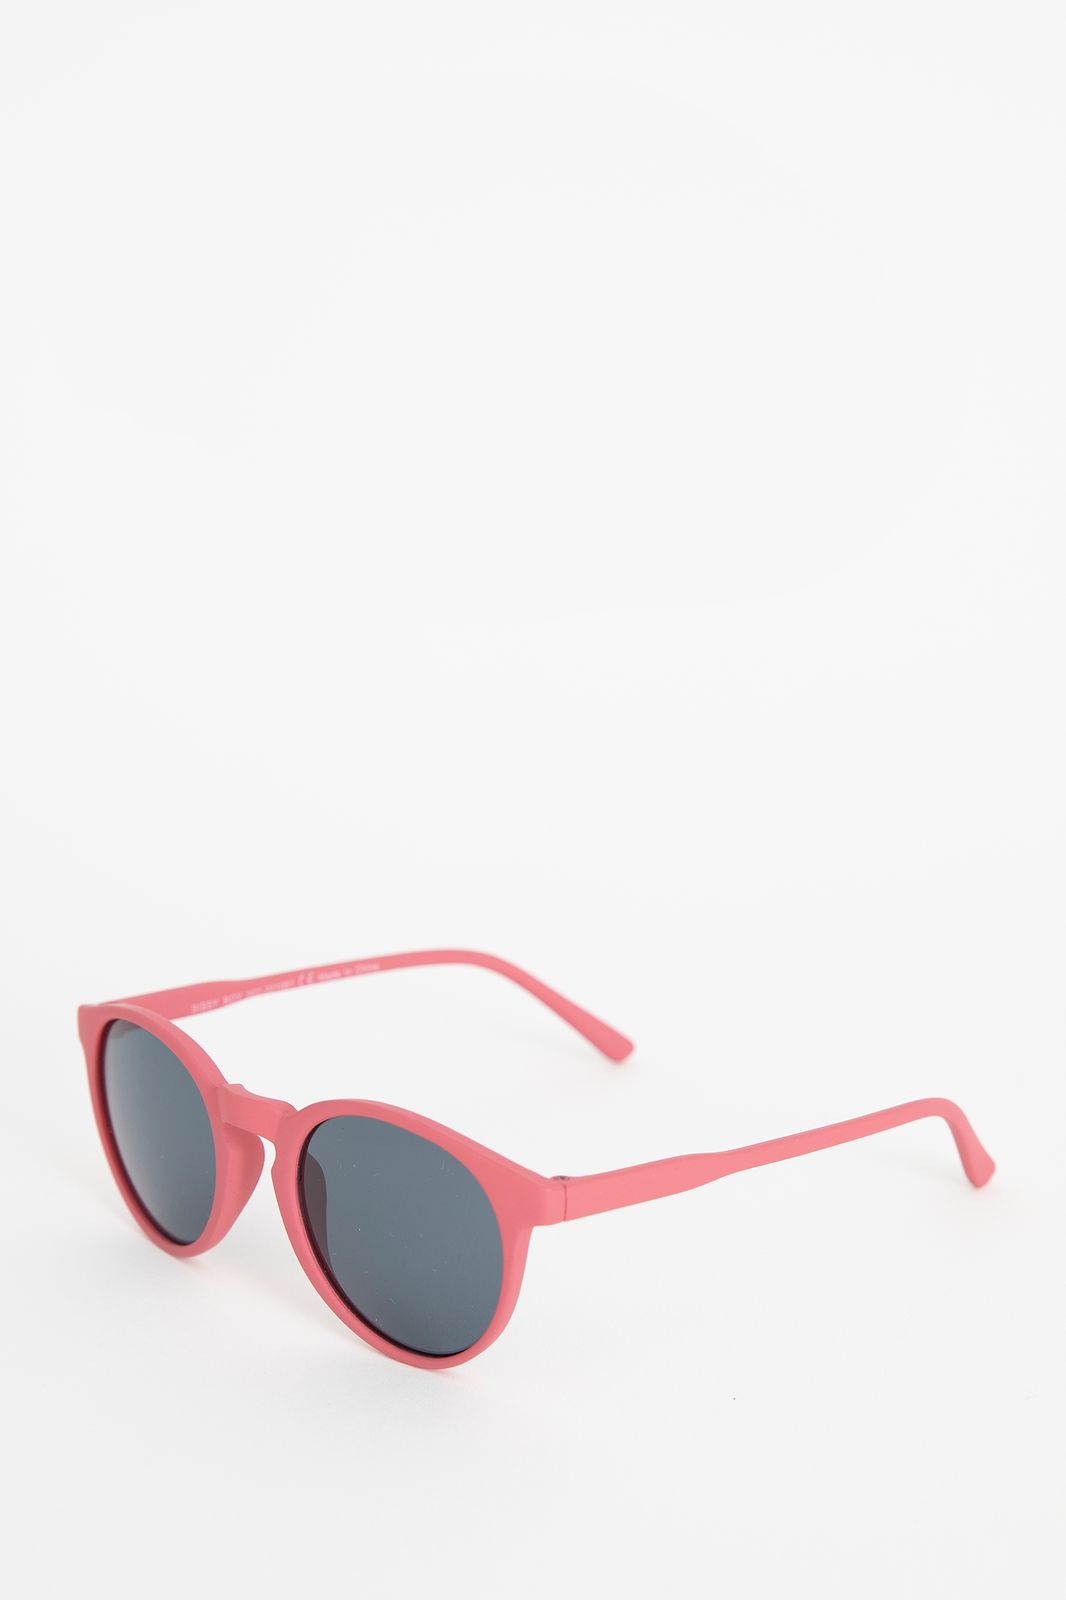 Runde Sonnenbrille - dunkelrosa